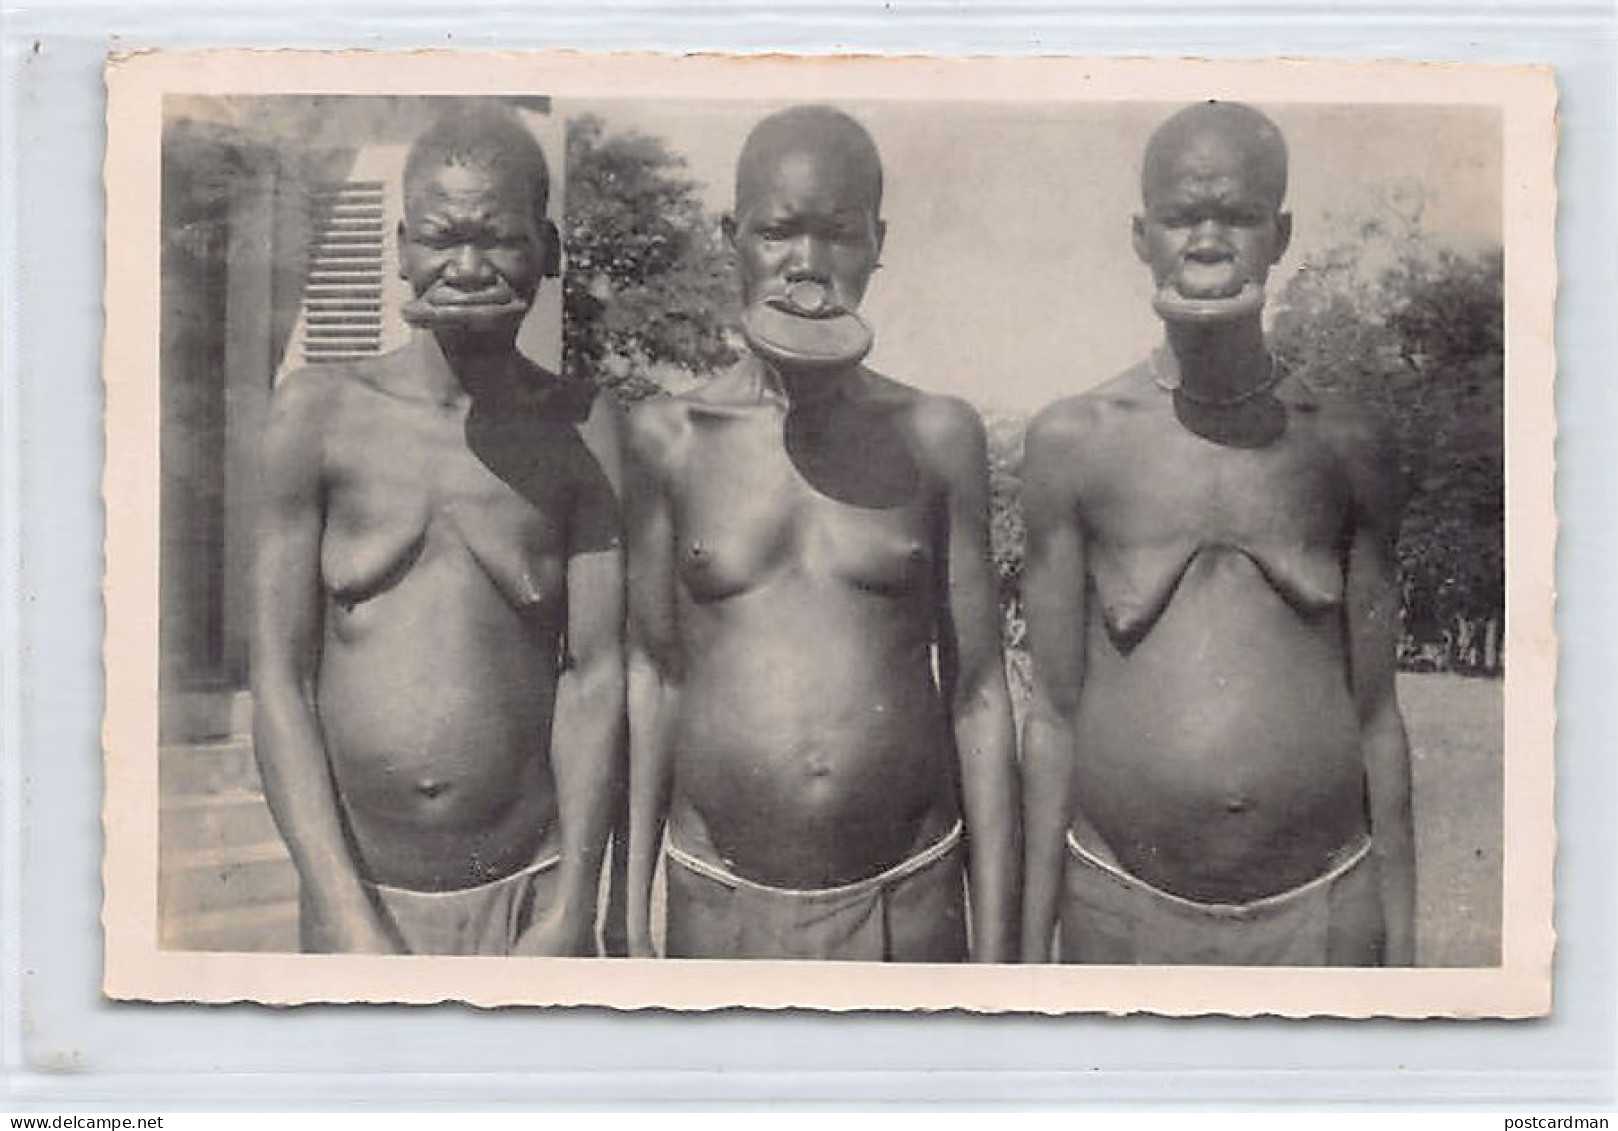 Centrafrique - Femmes à Plateaux - Race Sara Kaba - Ed. M. Balard 742 - Repubblica Centroafricana